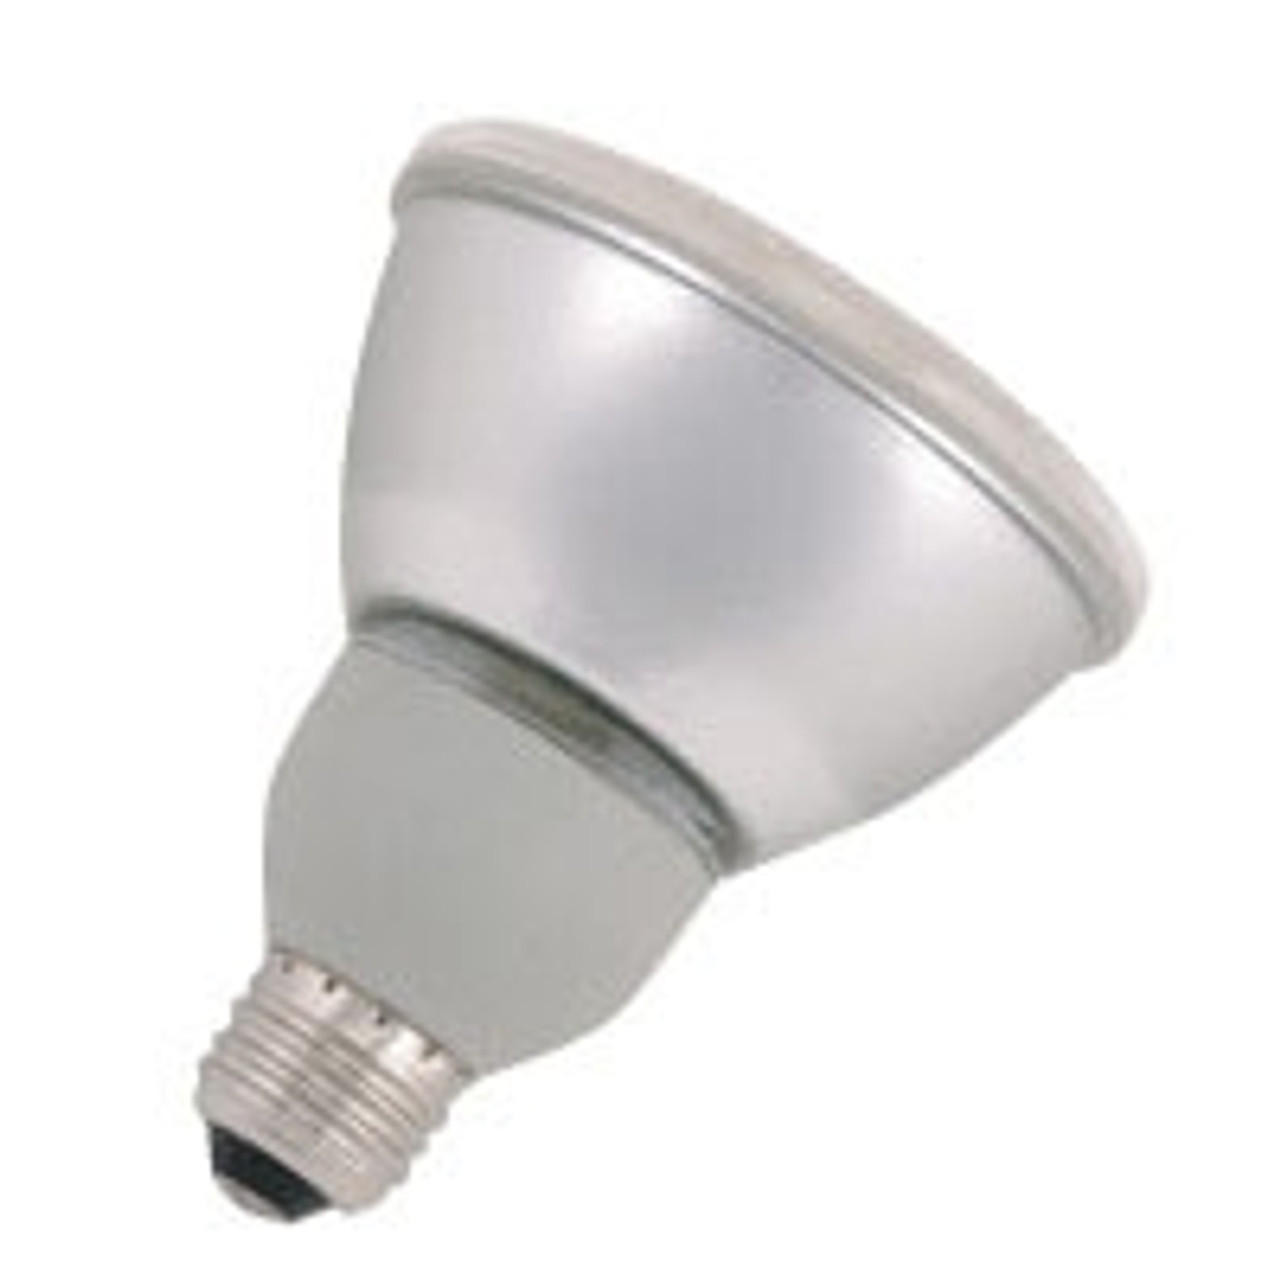 Plusrite CF15R30-841 15W R30 CFL Reflector Lamp